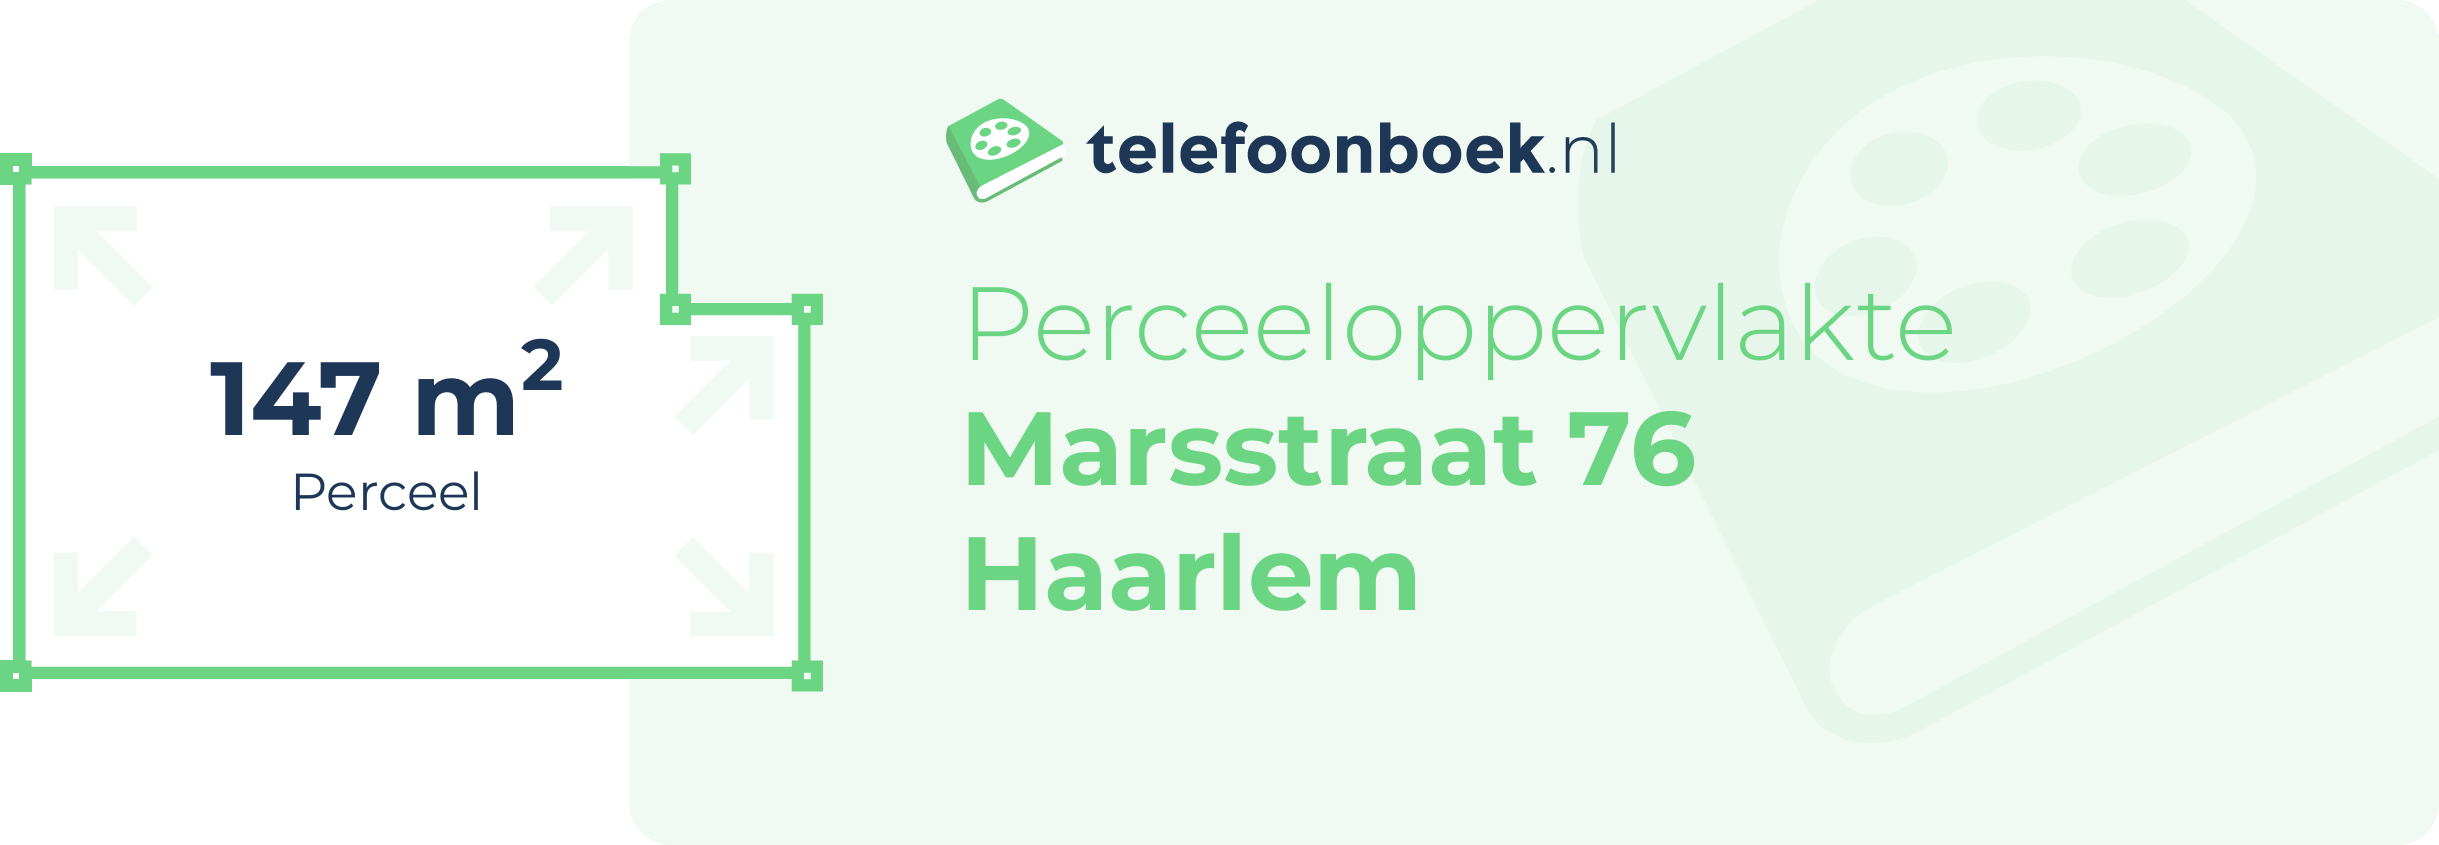 Perceeloppervlakte Marsstraat 76 Haarlem